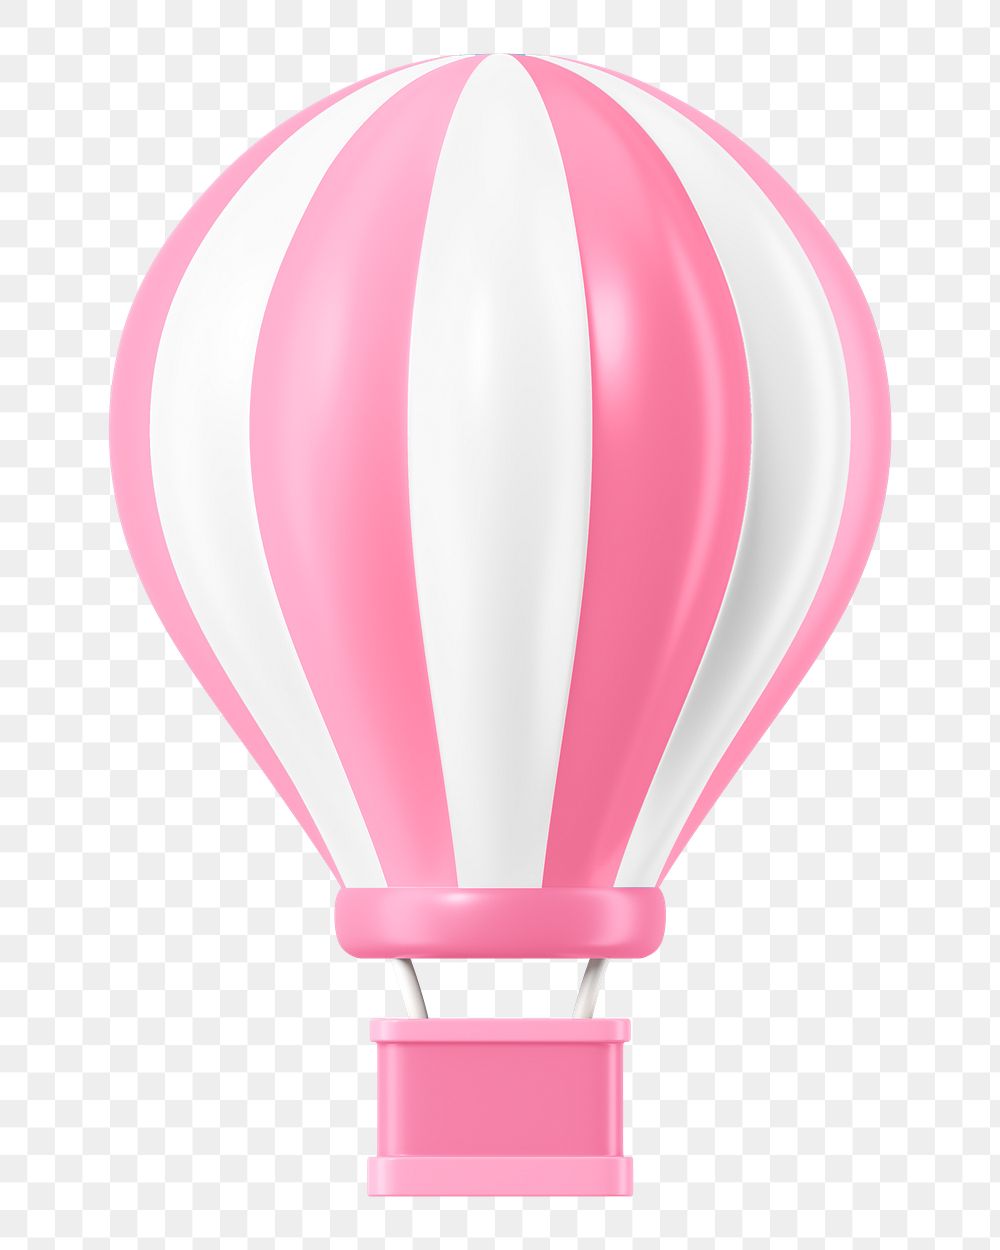 Pink hot air balloon png 3D element, transparent background